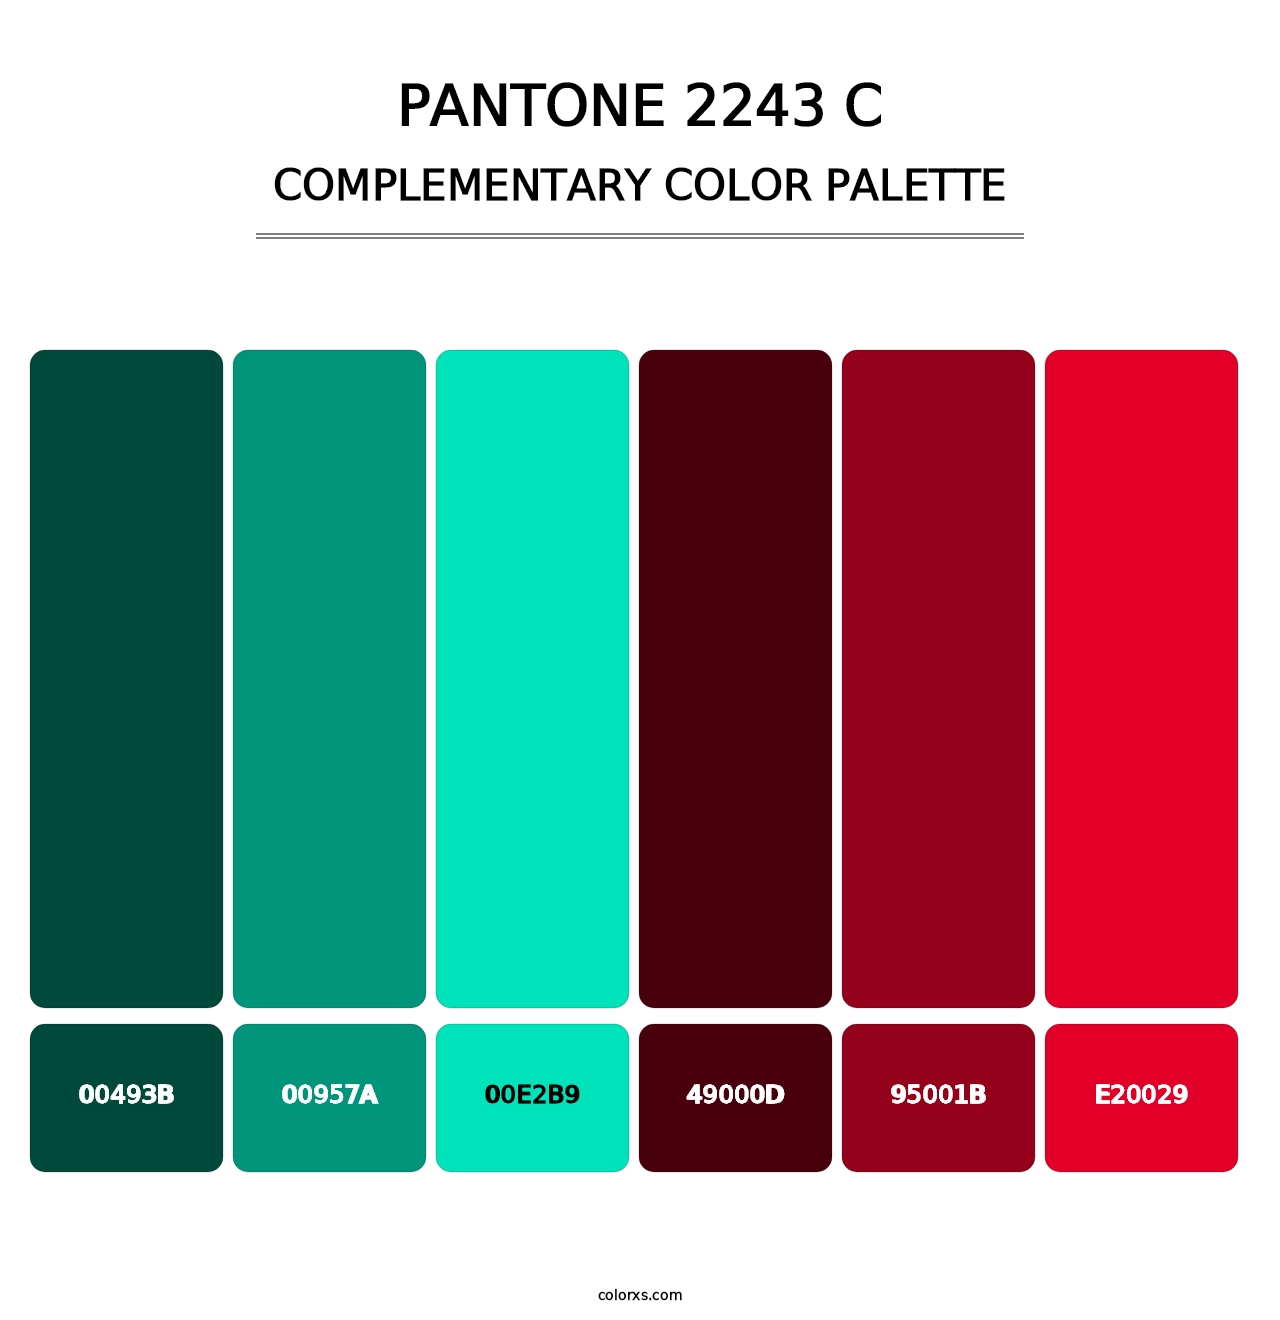 PANTONE 2243 C - Complementary Color Palette